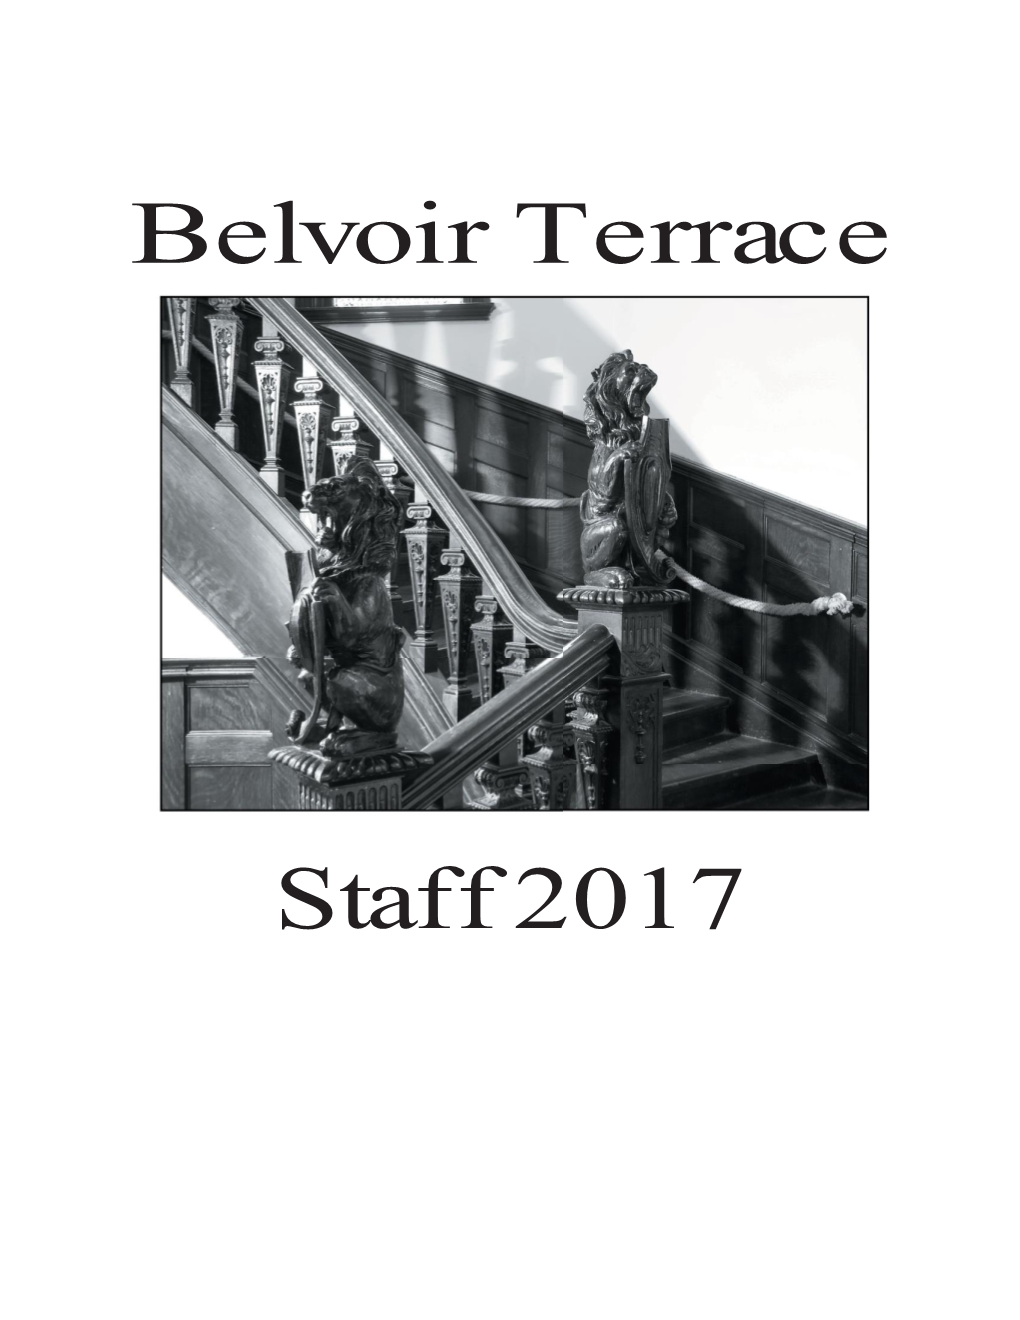 Belvoir Terrace Staff 2017